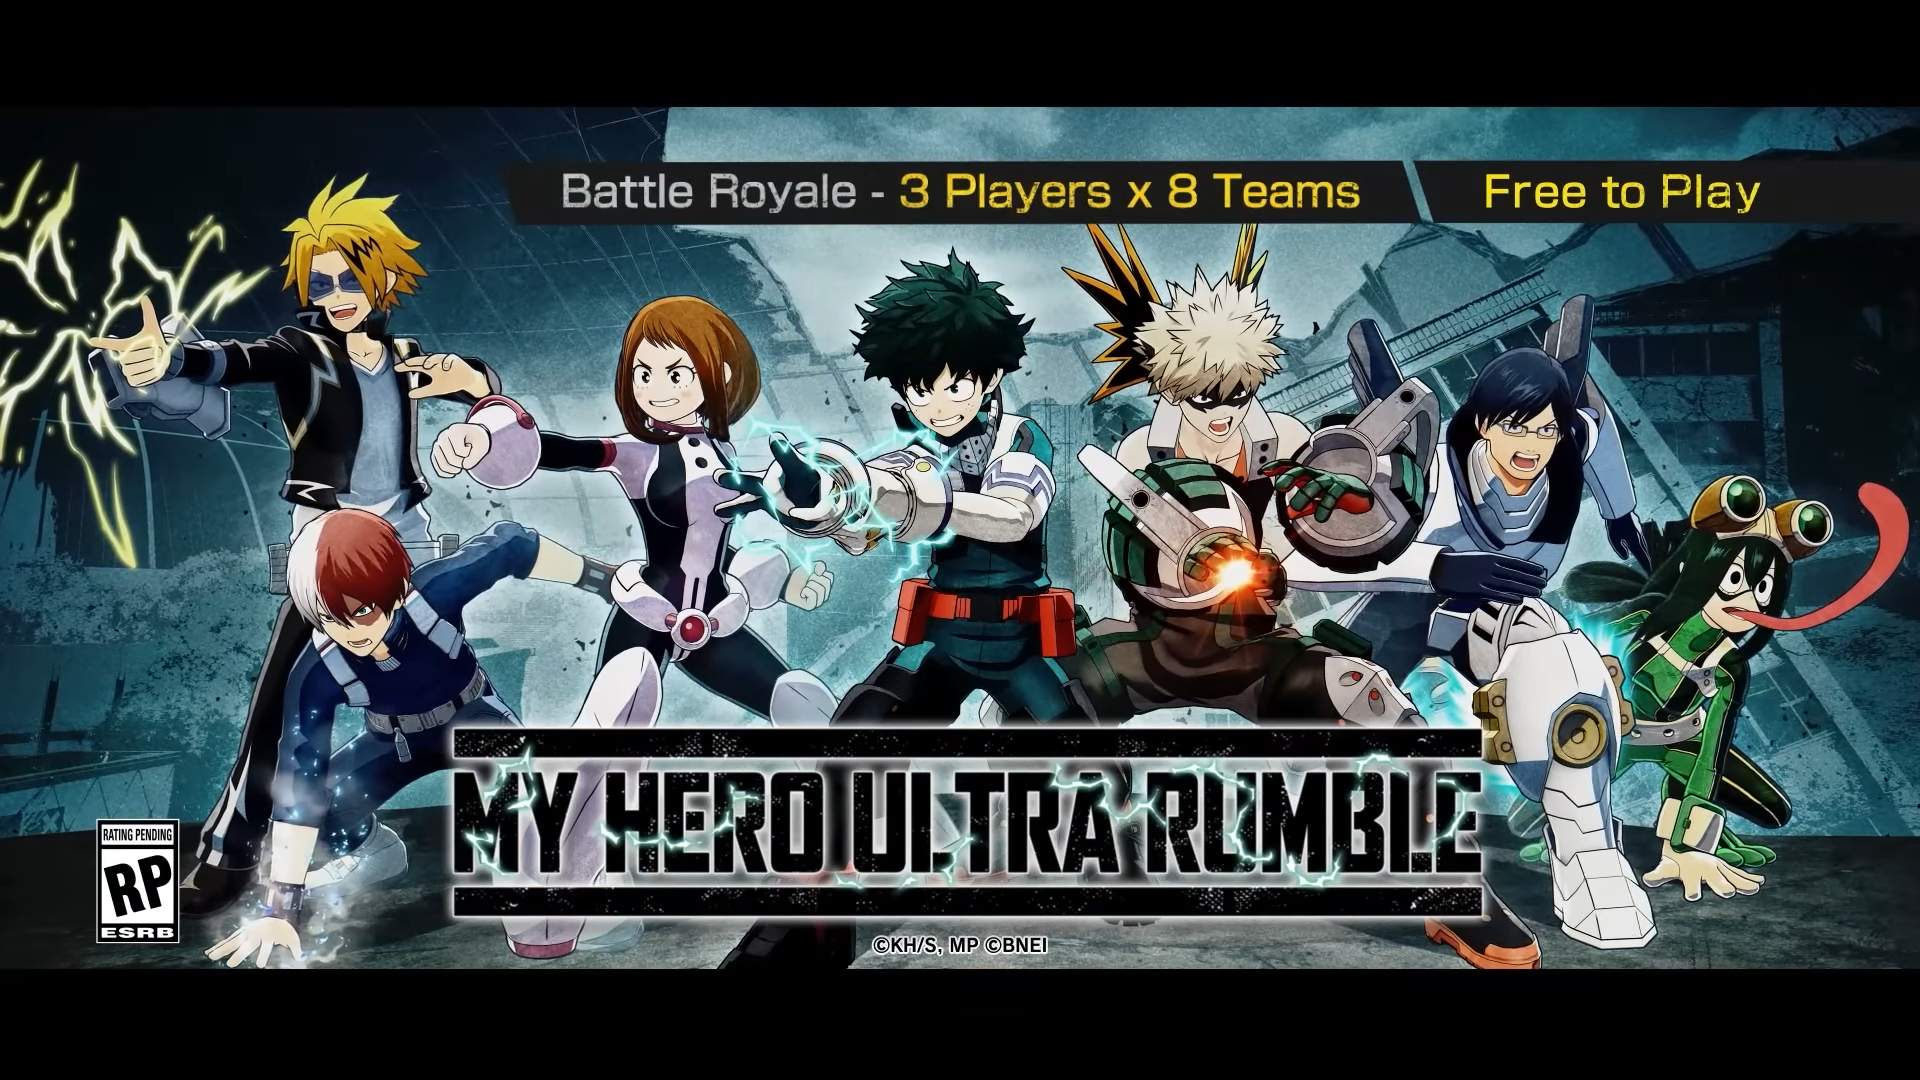 My Hero Academia: Ultra Rumble é o novo battle royale free-to-play